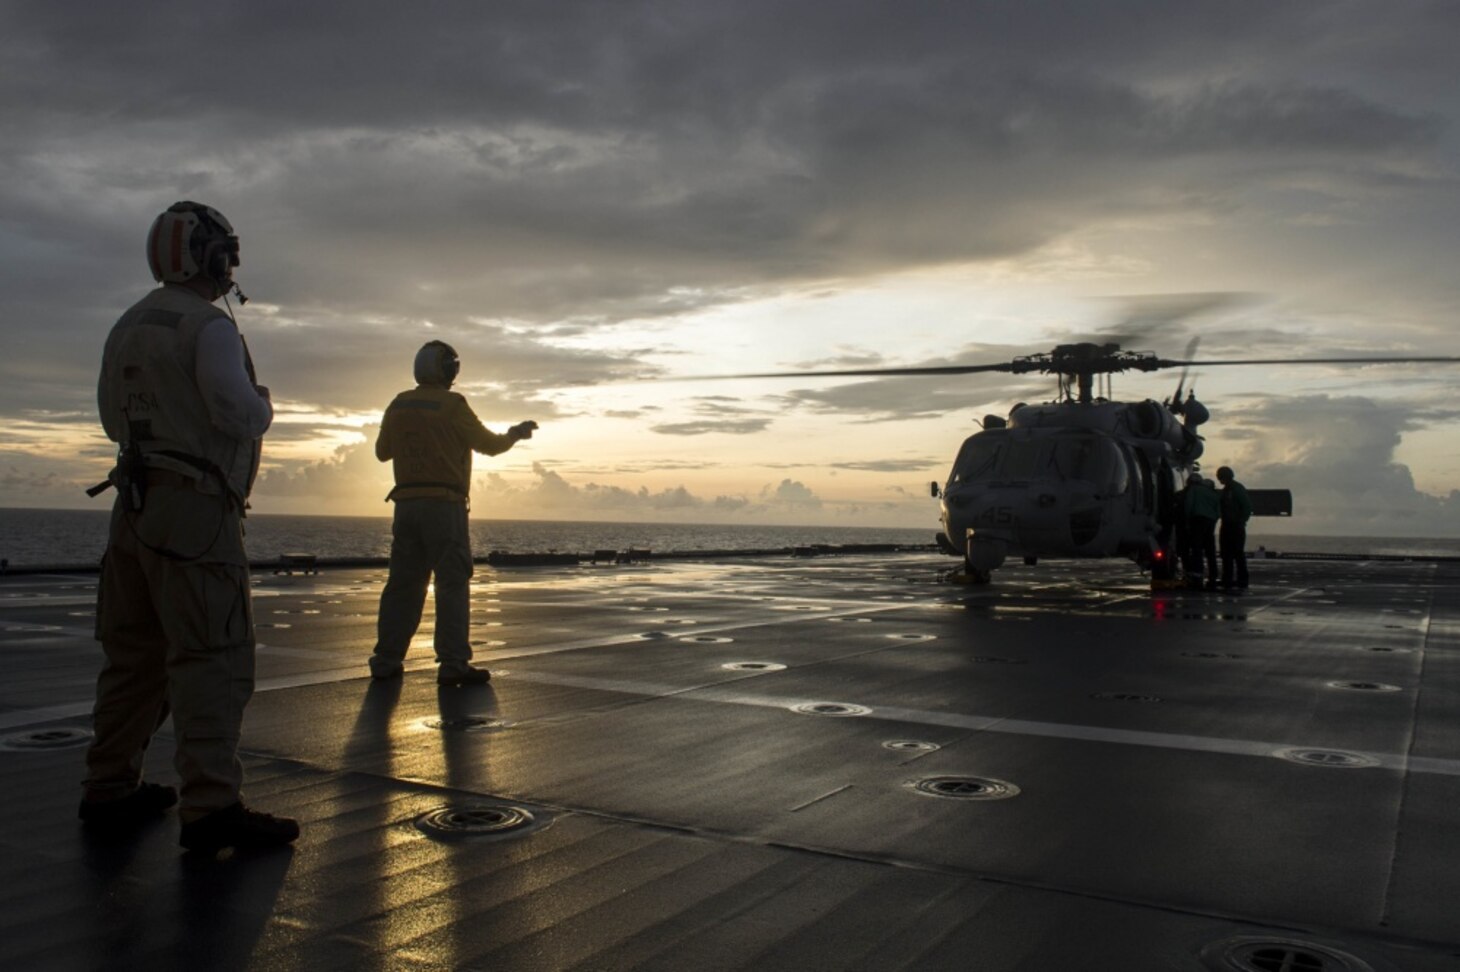 U.S. Navy's Third Fleet Rebalances to East Asia